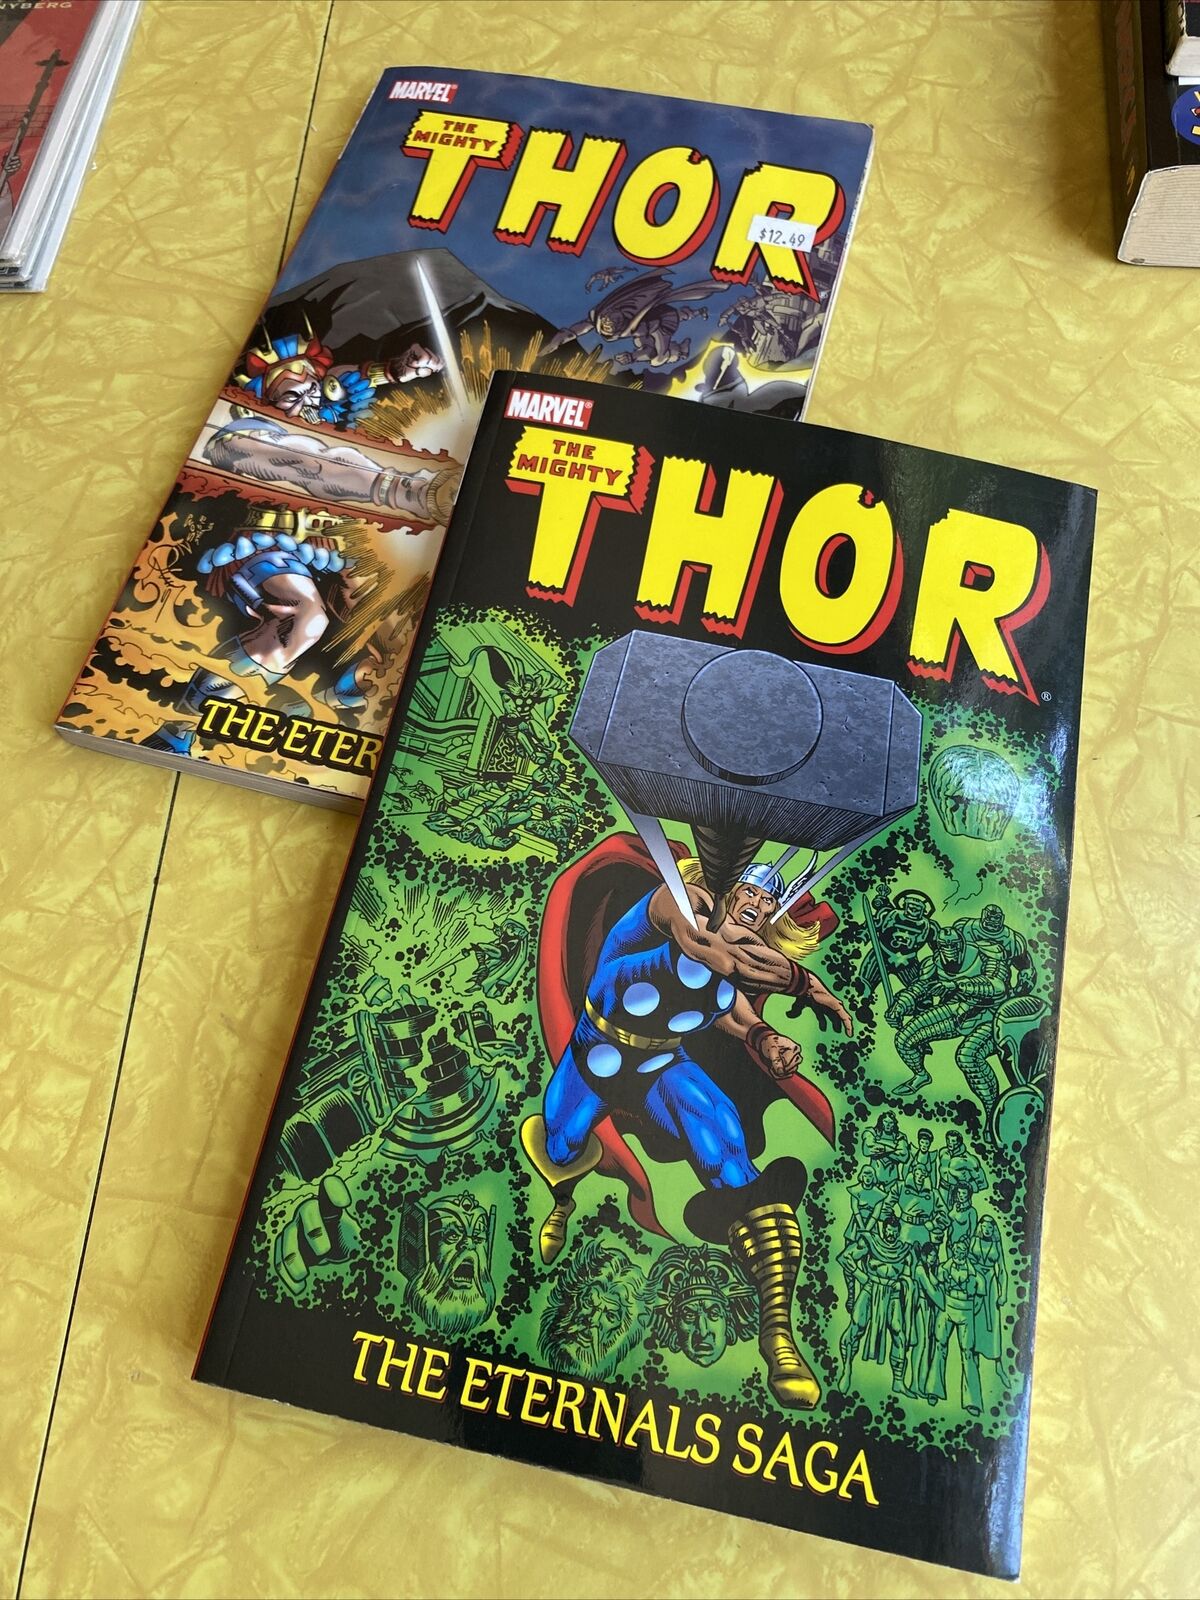 LOT OF 2 Books - Thor: The Eternals Saga vol. 1 & 2 TPB Lot (Marvel, 2006-07)